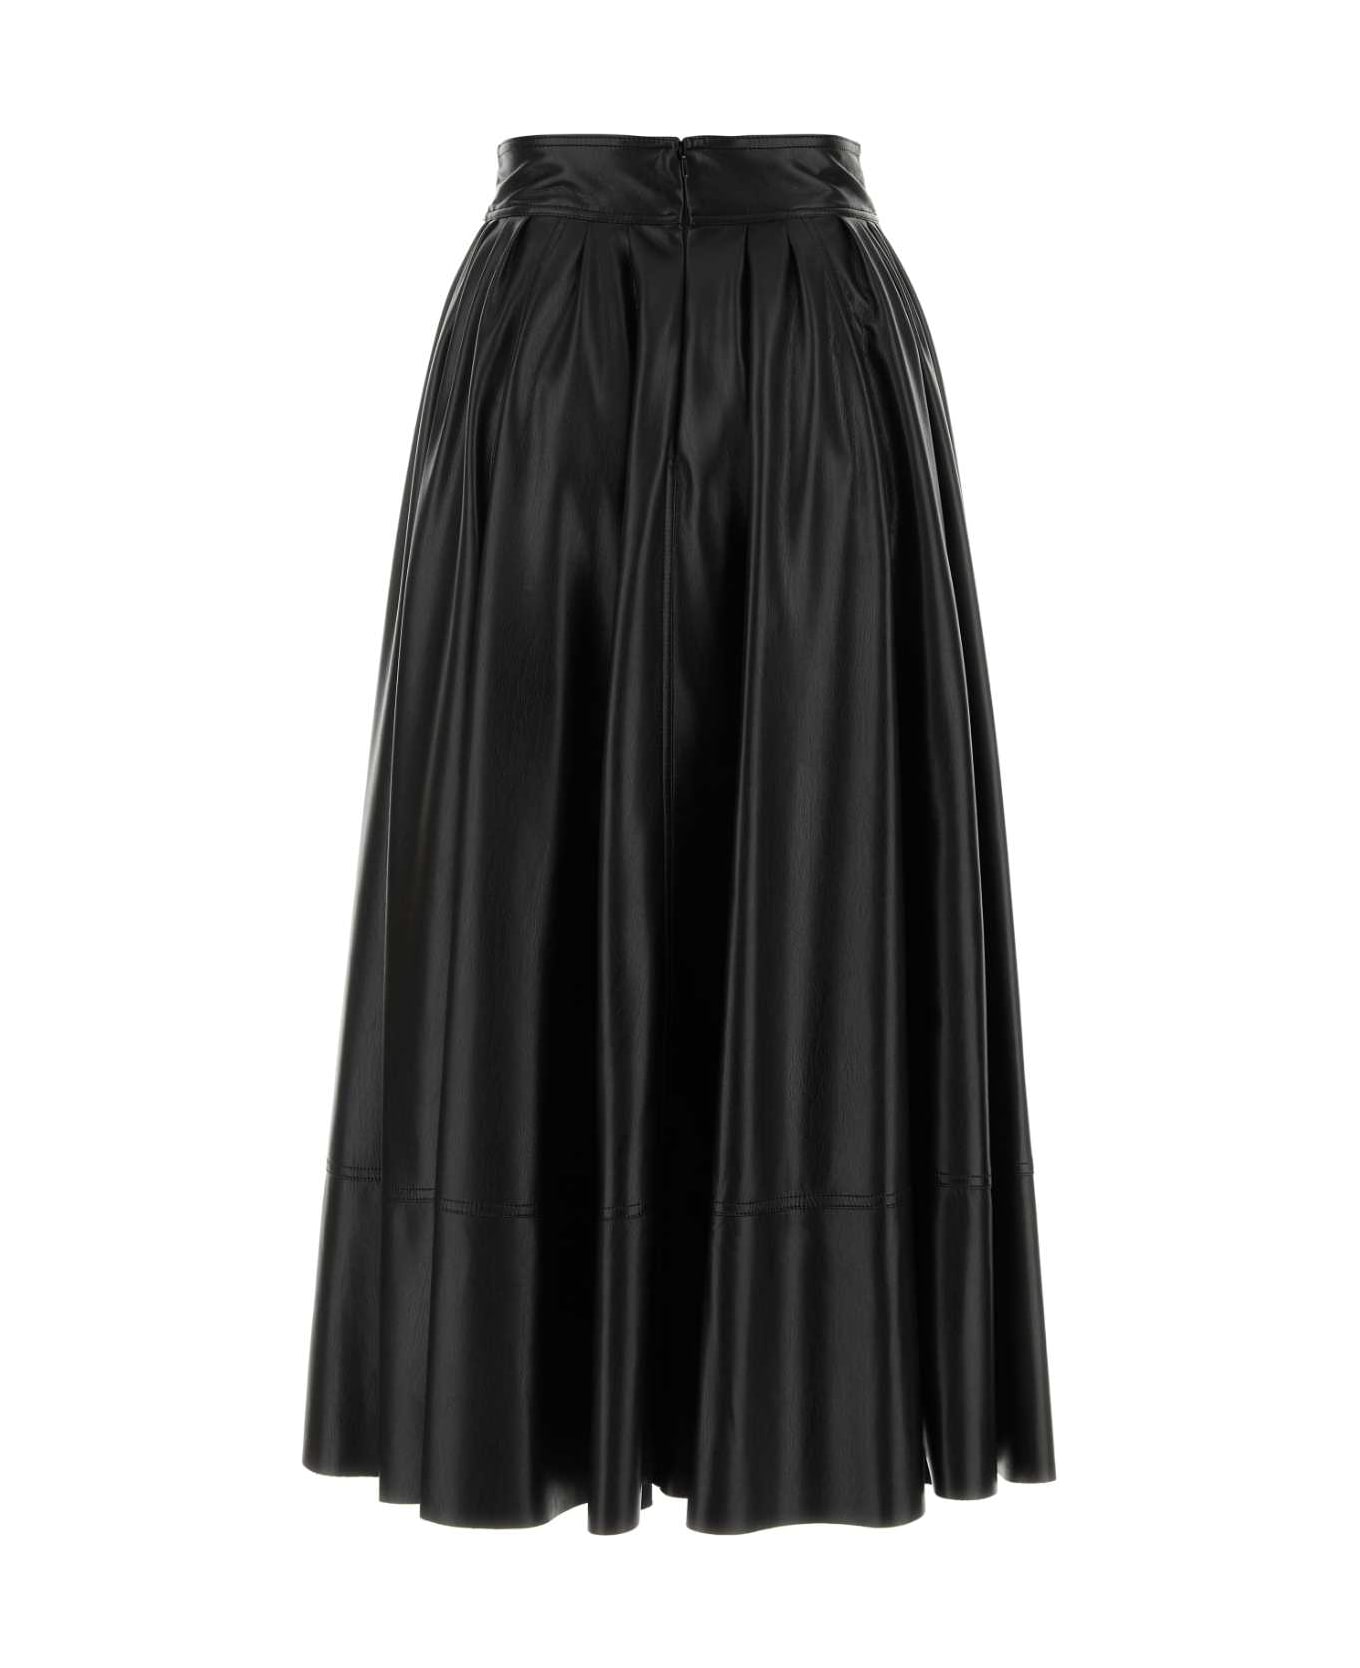 Philosophy di Lorenzo Serafini Black Synthetic Leather Skirt - NERO スカート